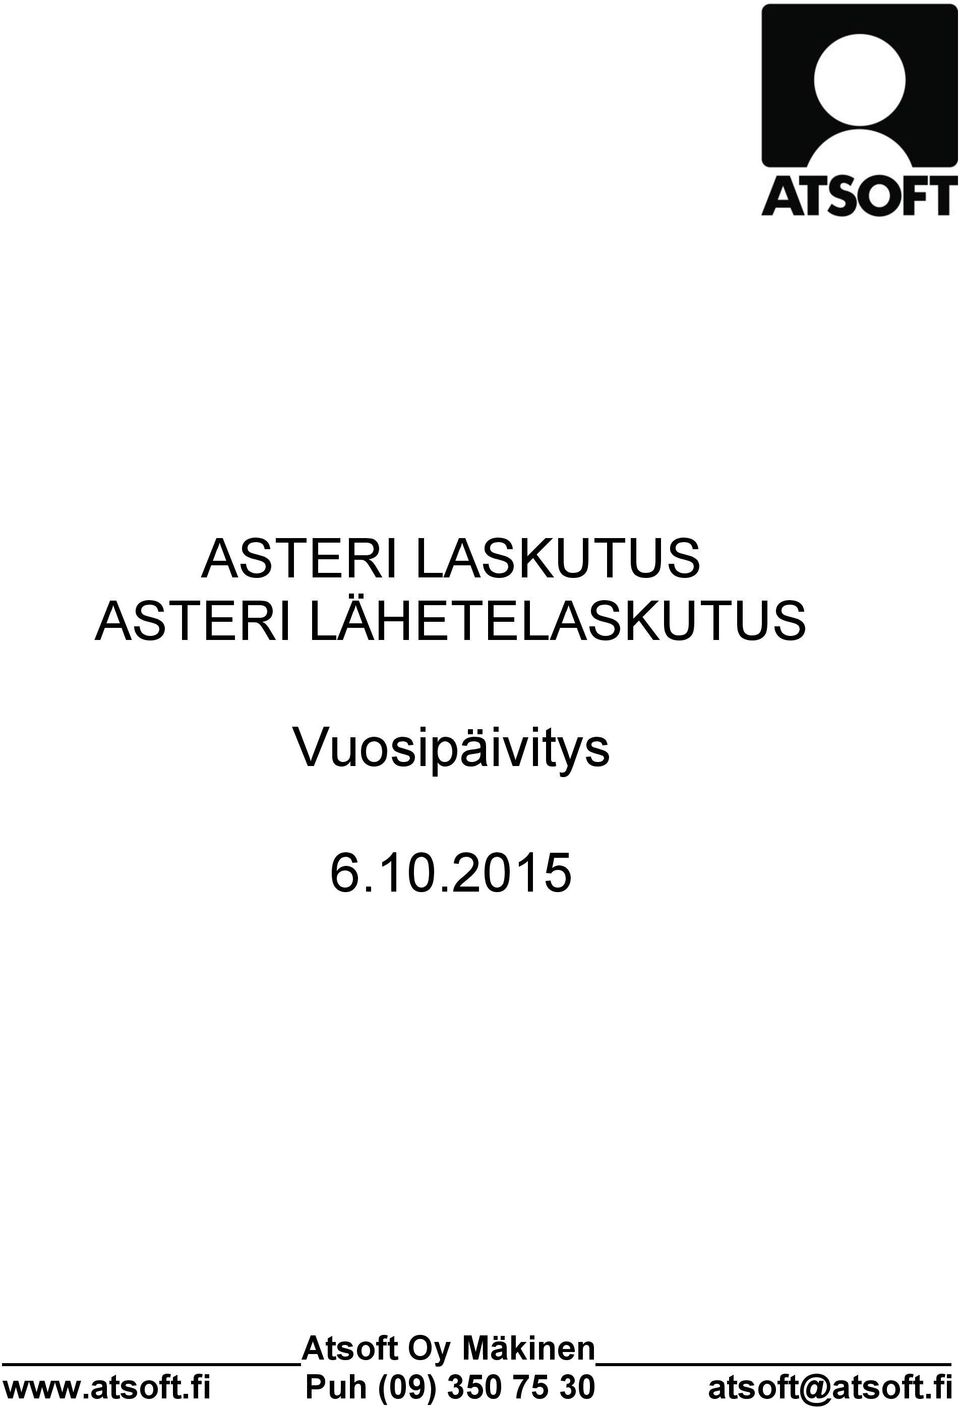 10.2015 Atsoft Oy Mäkinen www.